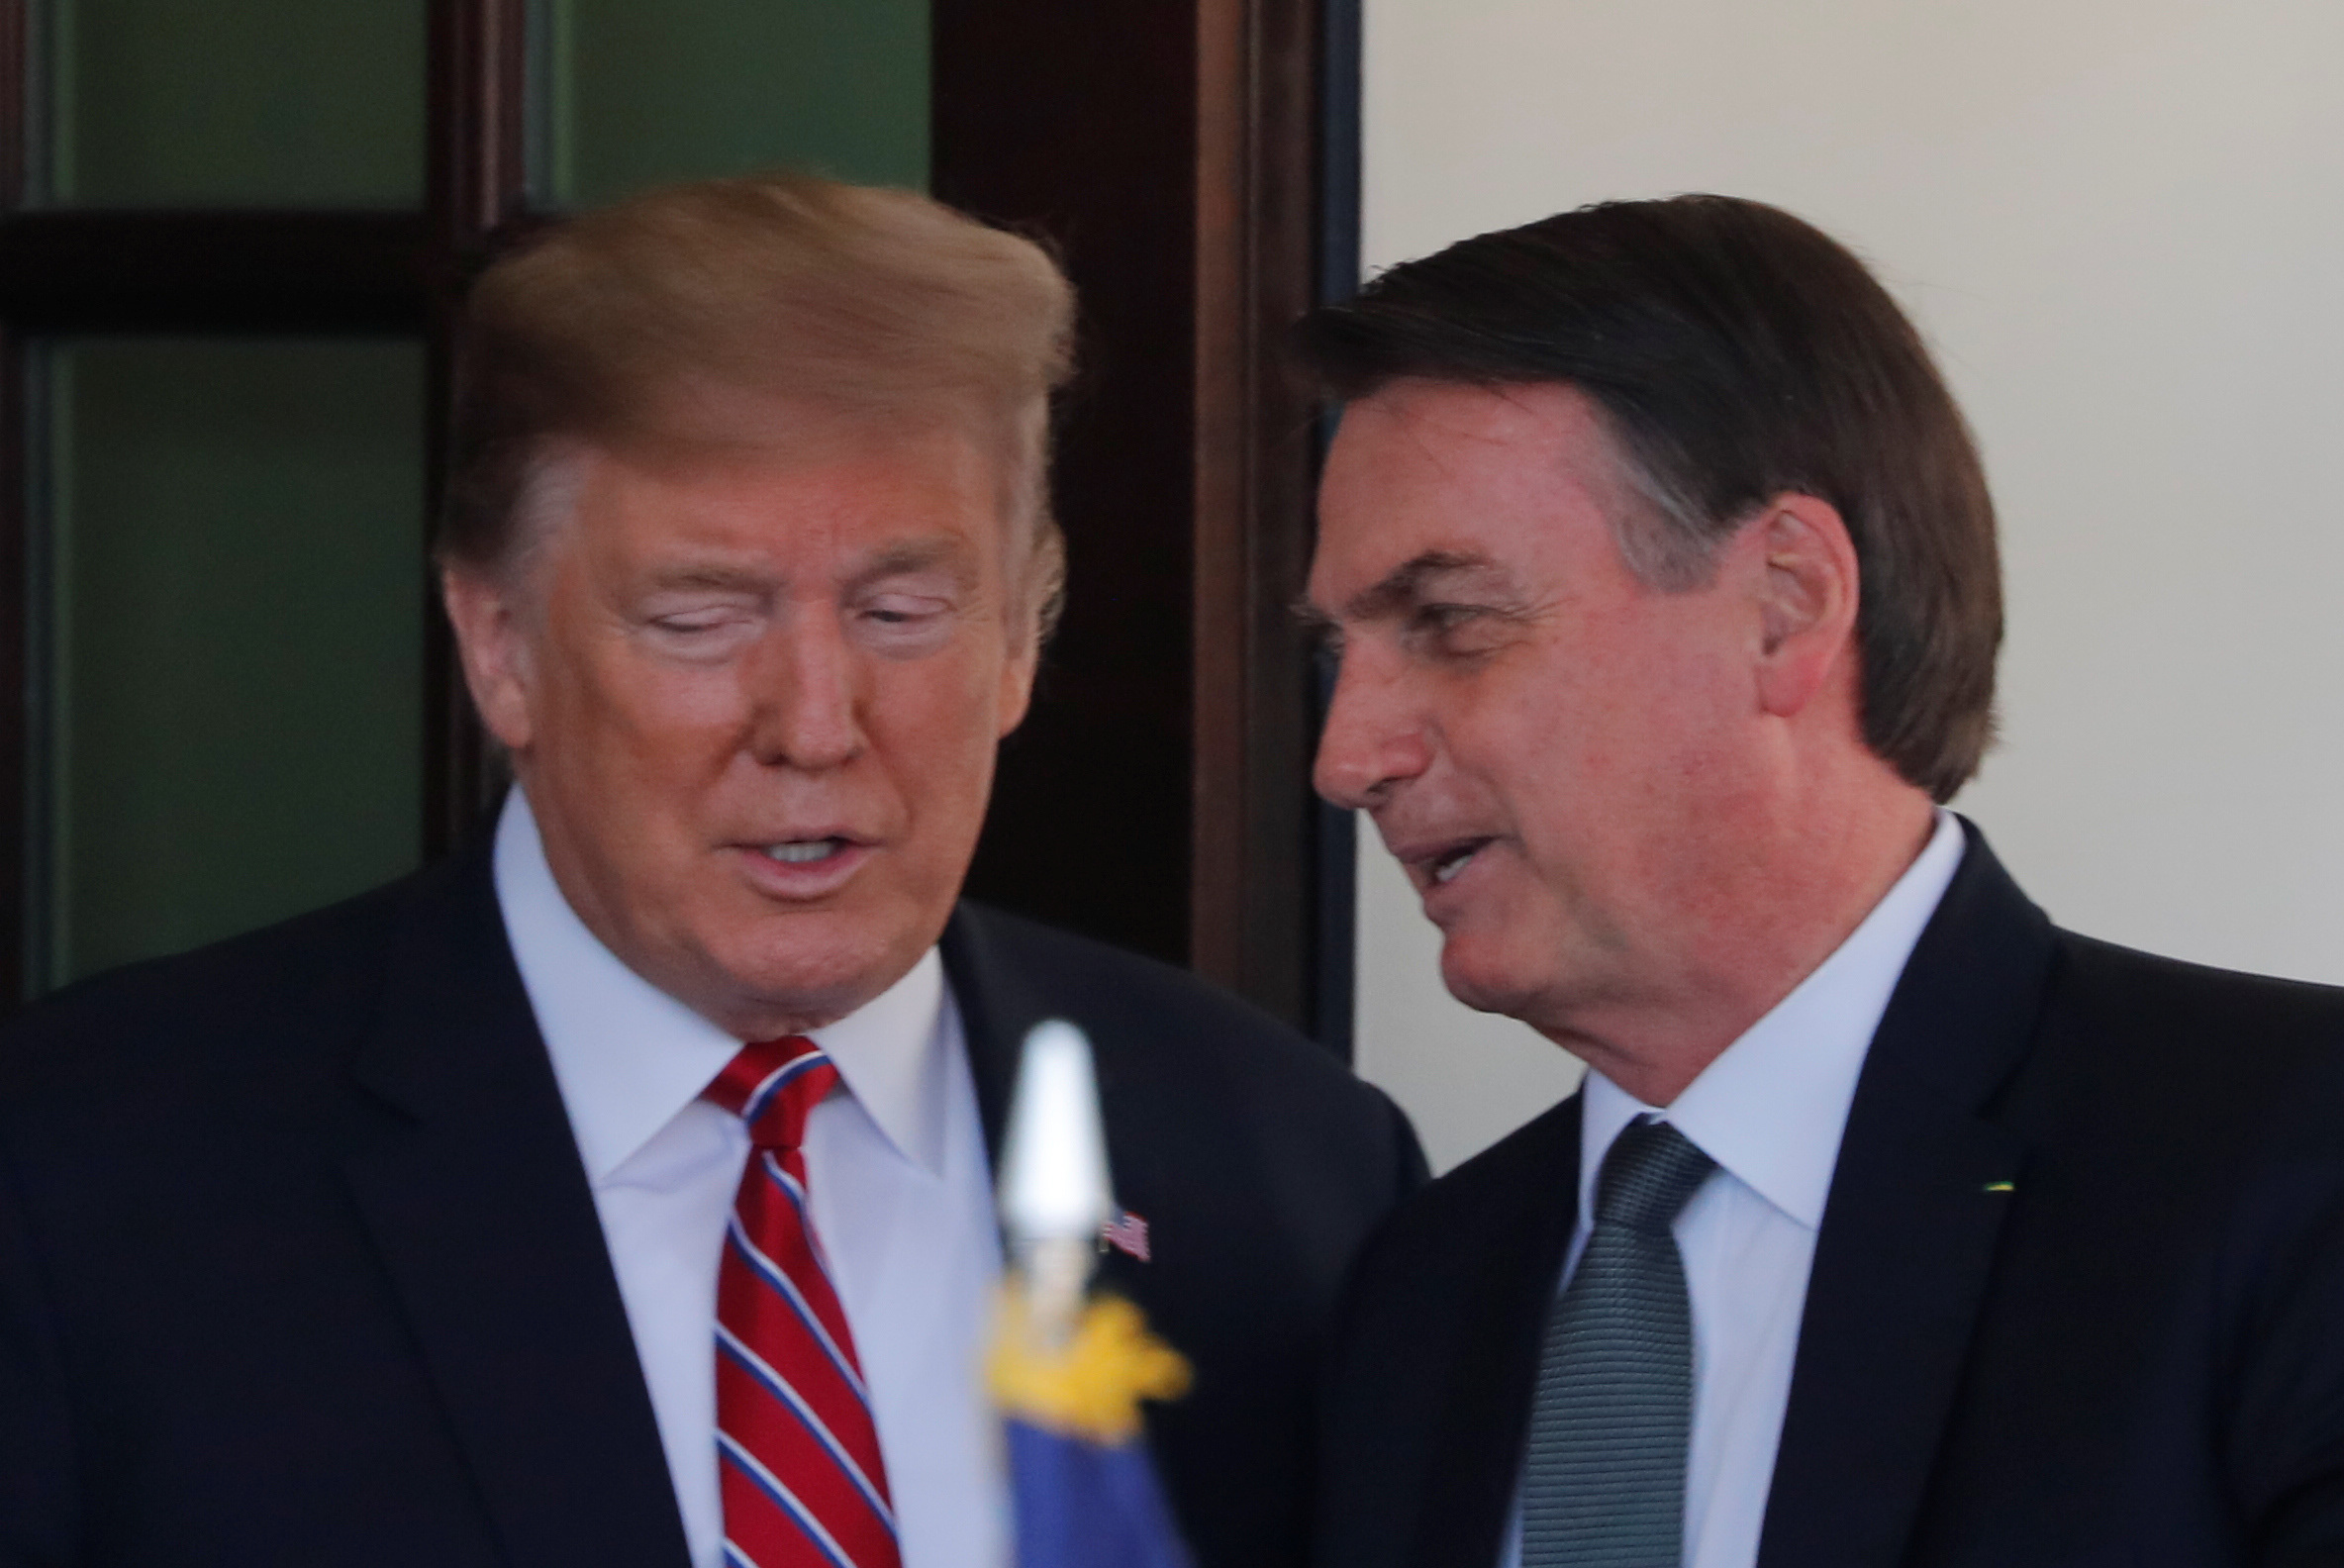 U.S. President Trump welcomes Brazilian President Bolsonaro at the White House in Washington